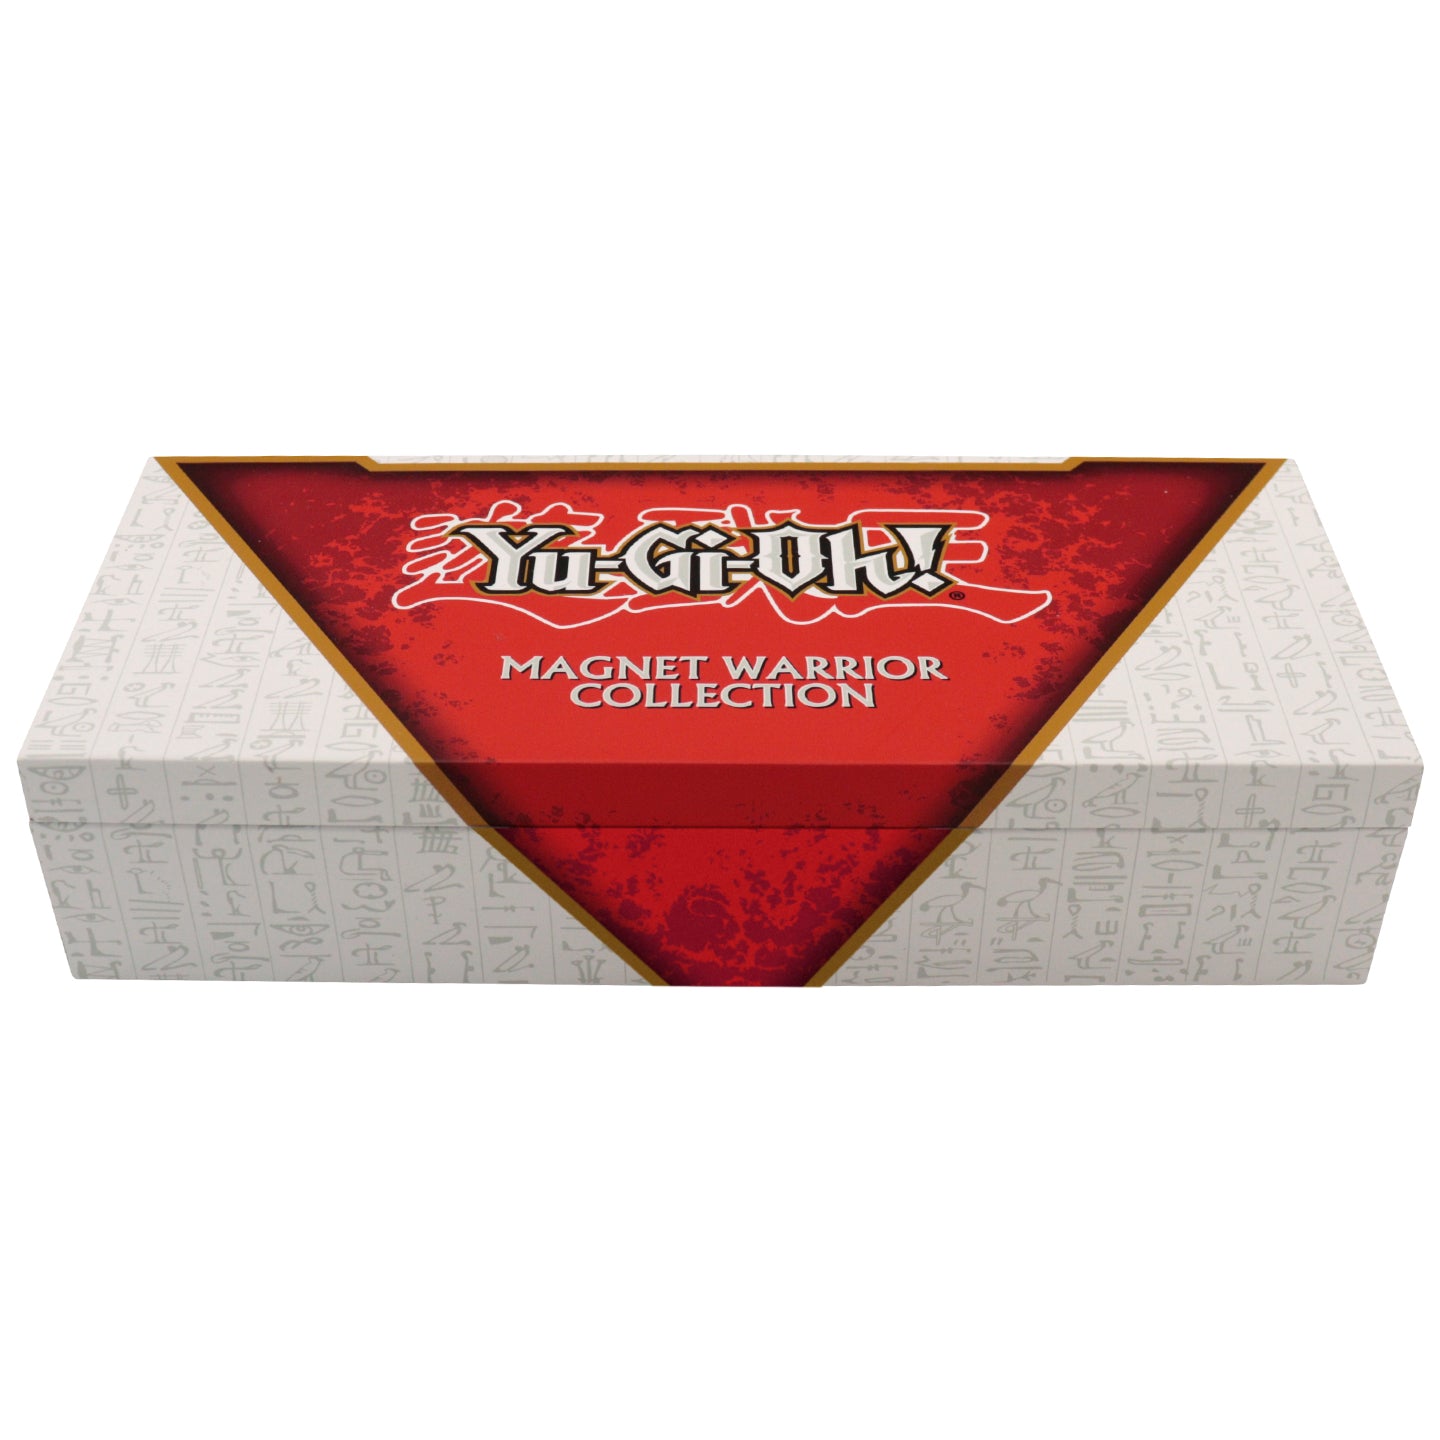 Yu-Gi-Oh! Limited Edition Magnet Warrior Ingot Set box